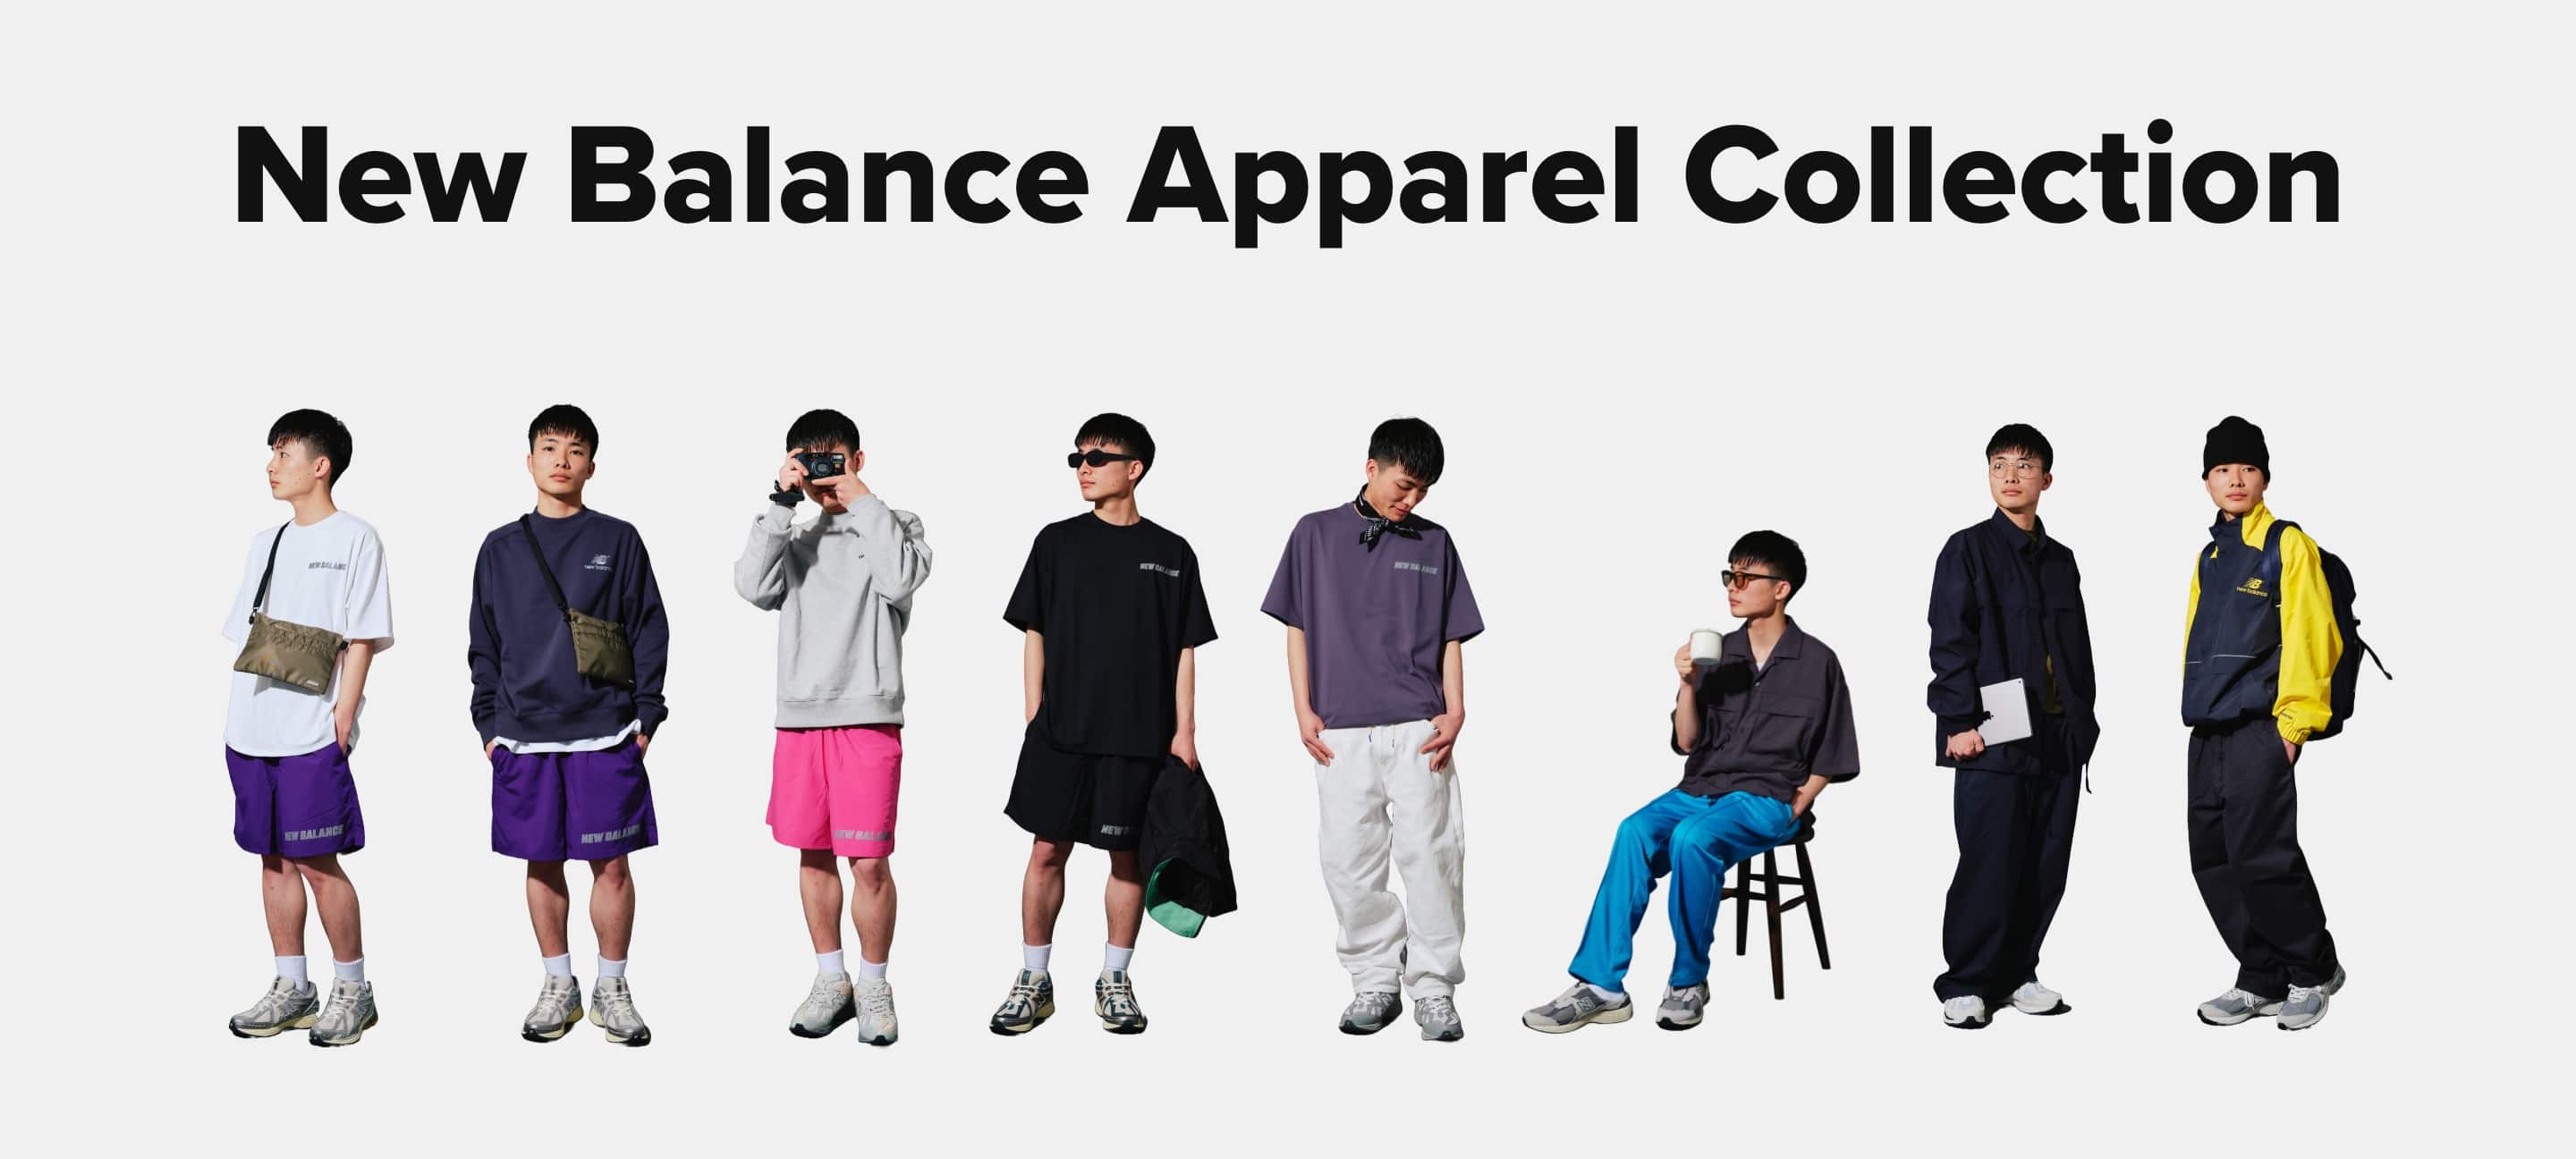 "New balance Apparel Collection"